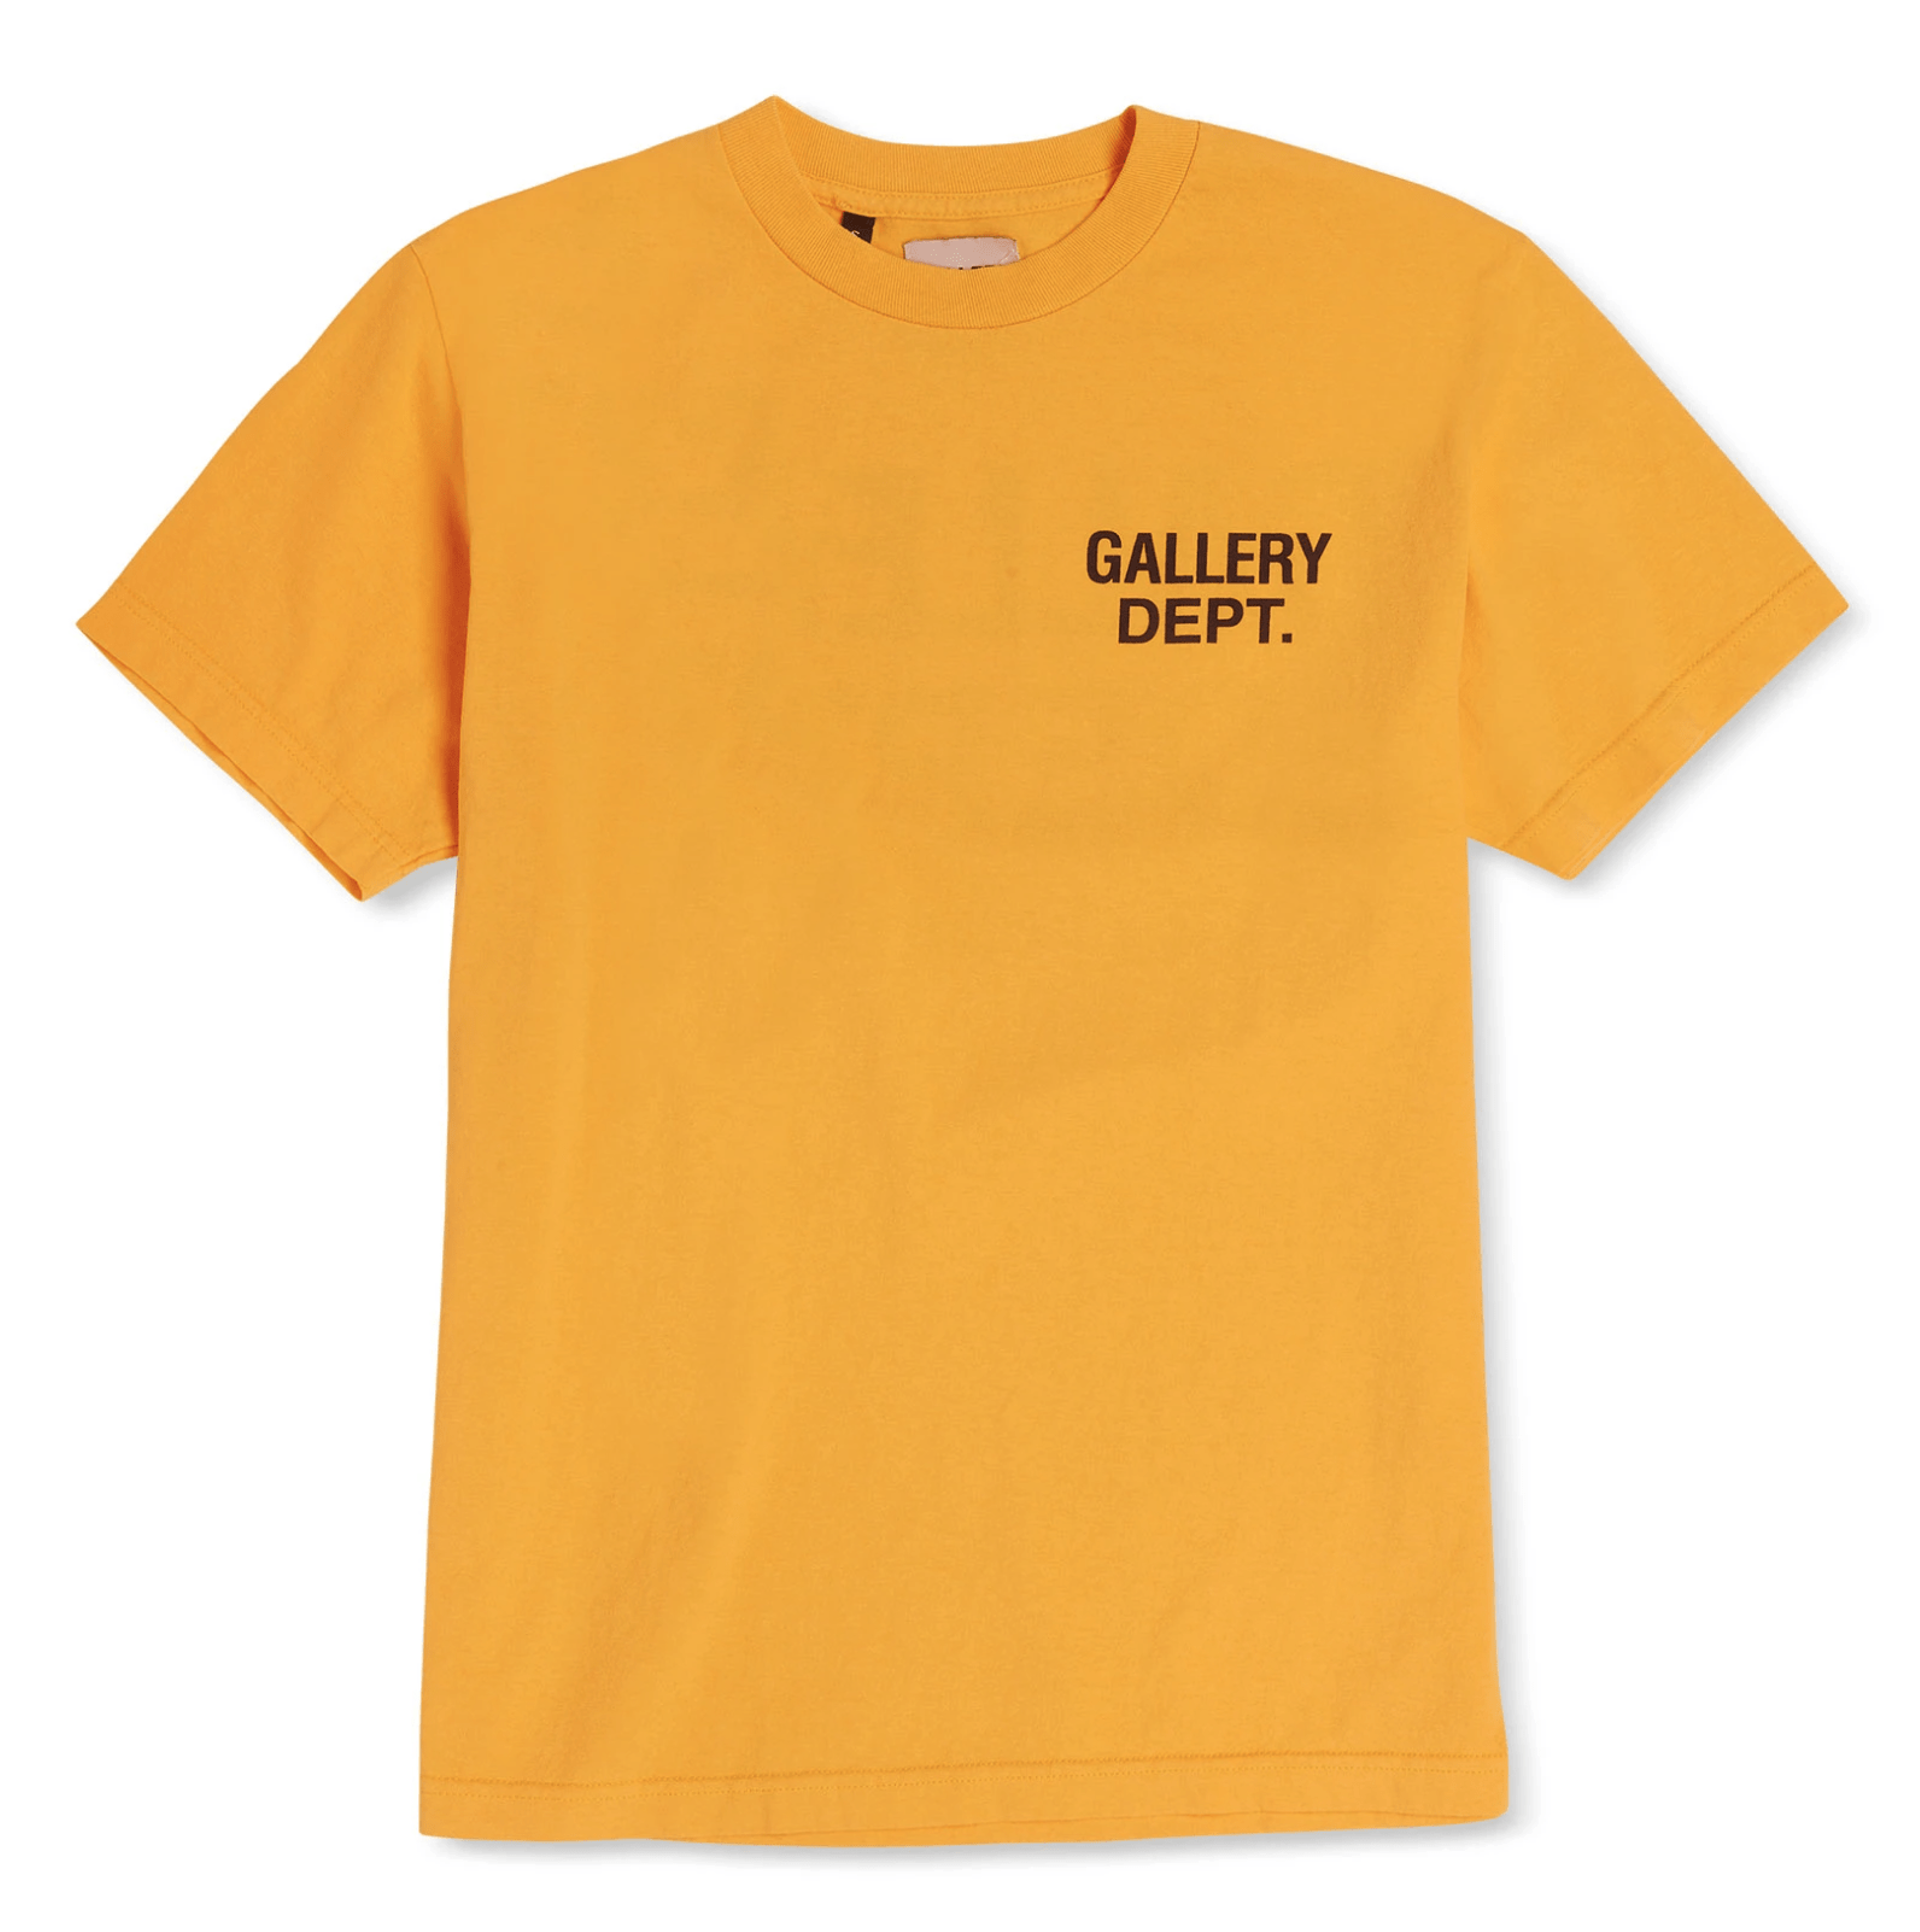 Alternate View 1 of Gallery Department Souvenir Short Sleeve Tee Shirt Yellow